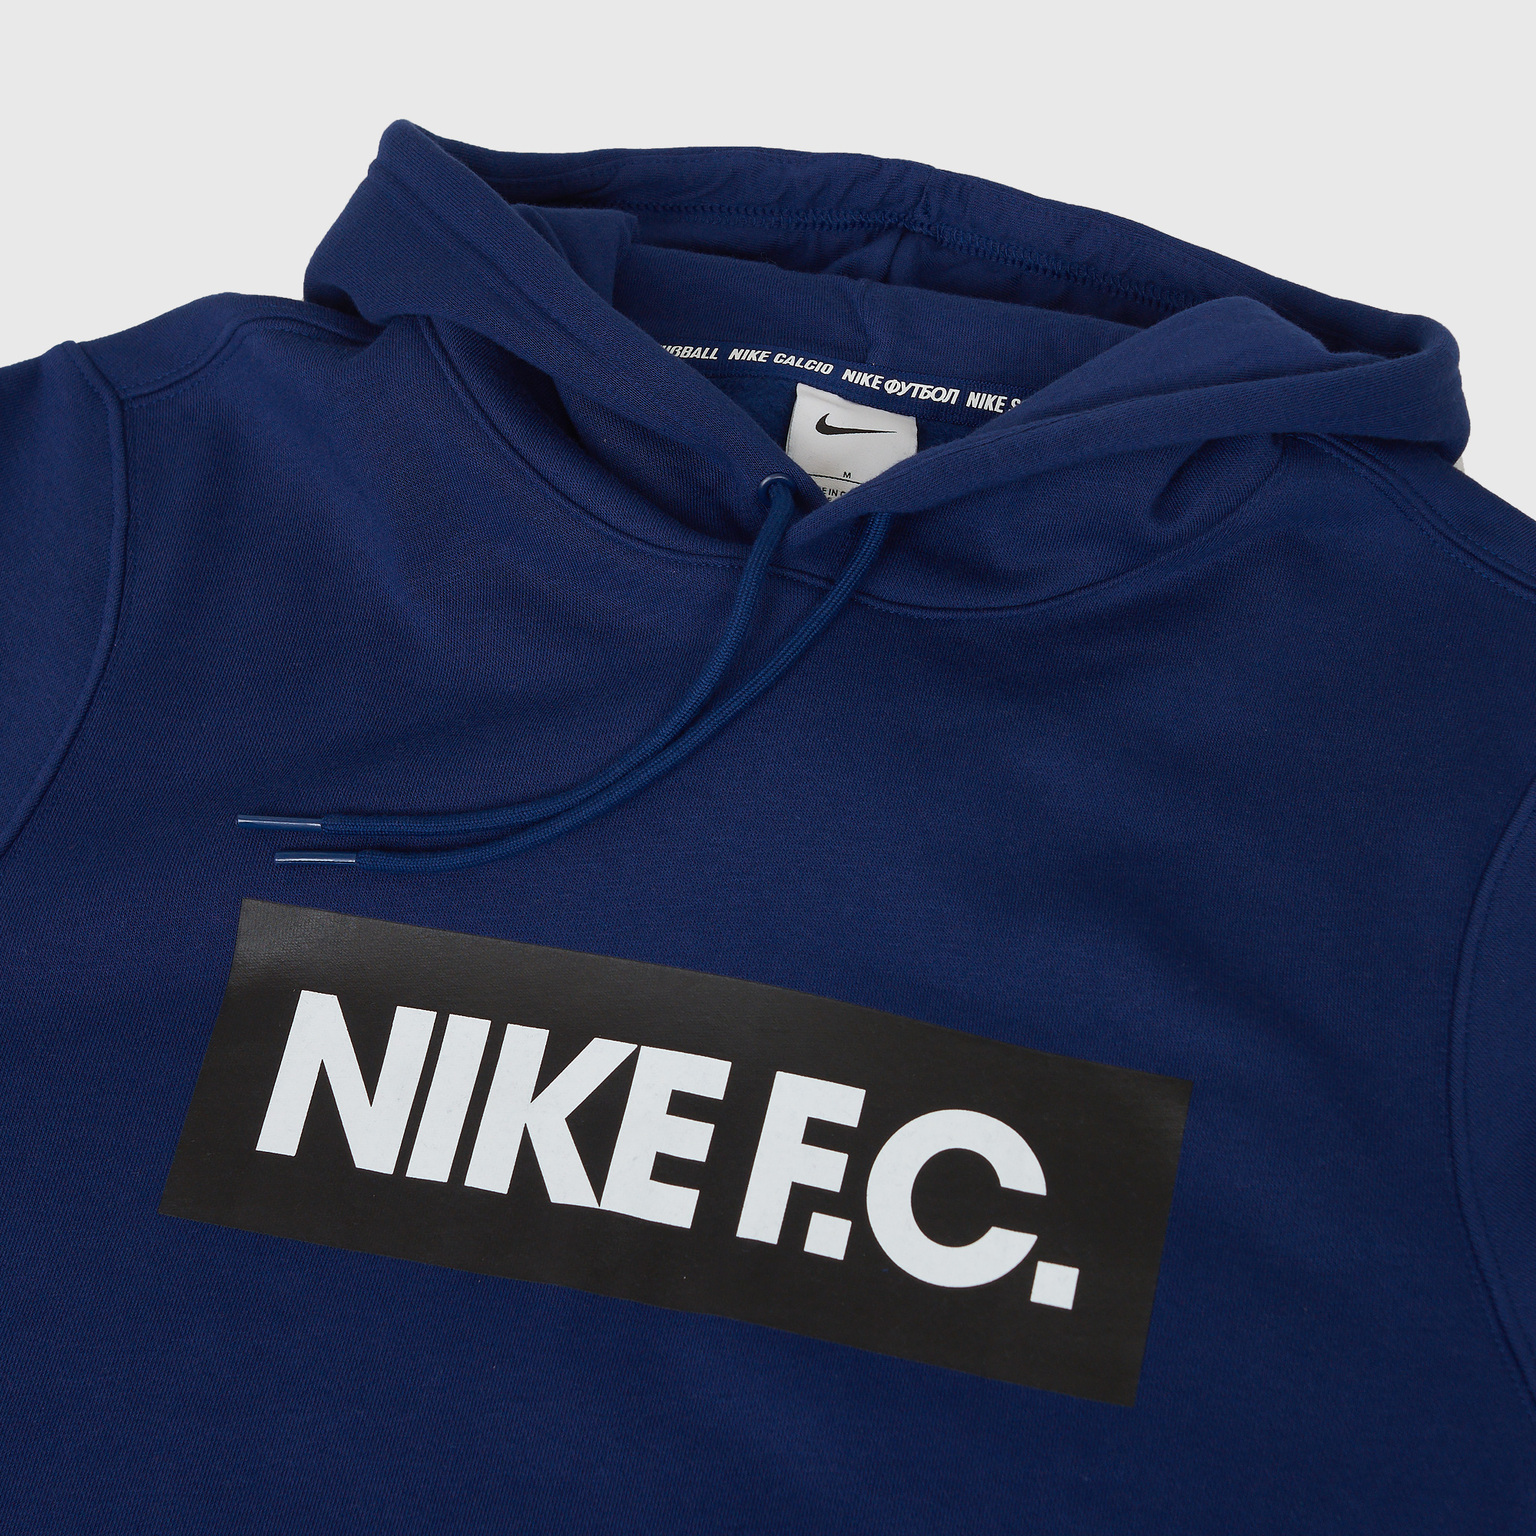 Толстовка Nike F.C. Fleece Hoodie CT2011-492